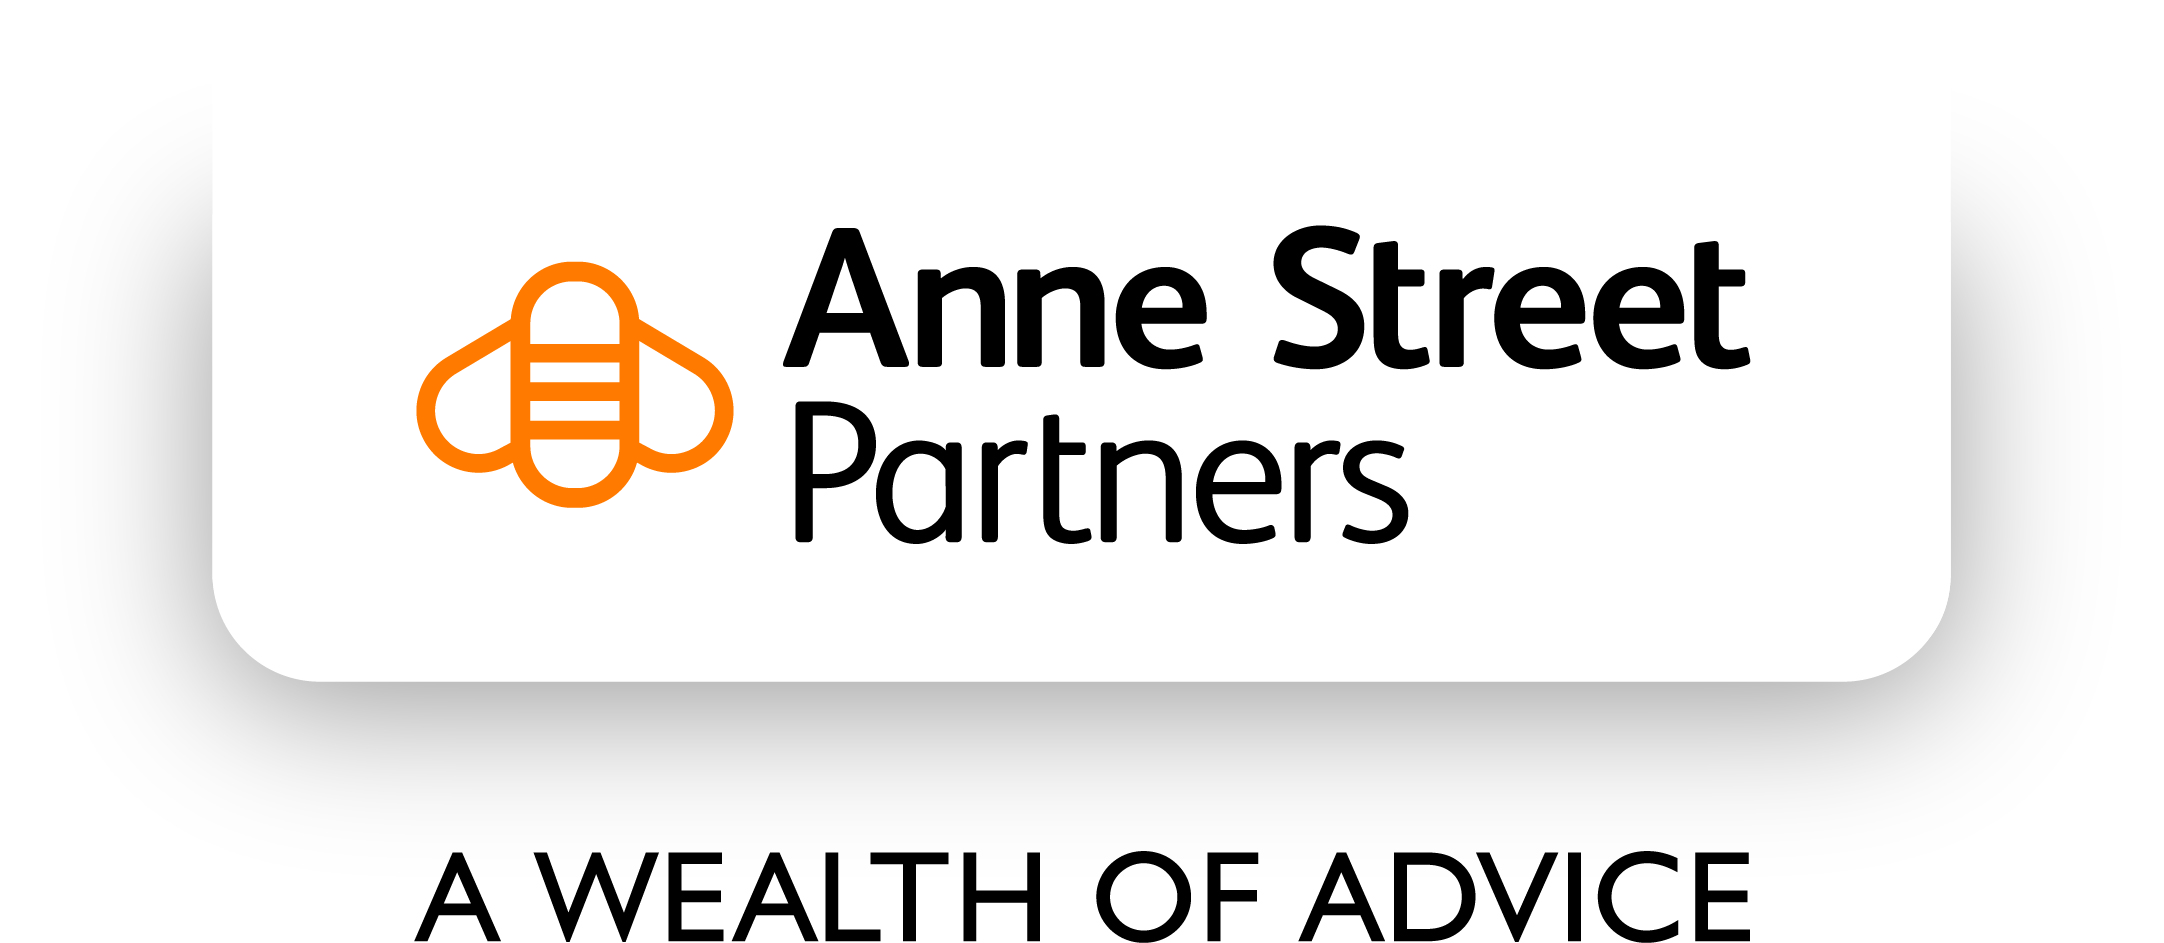 Anne Street Partners Financial Services Pty Ltd